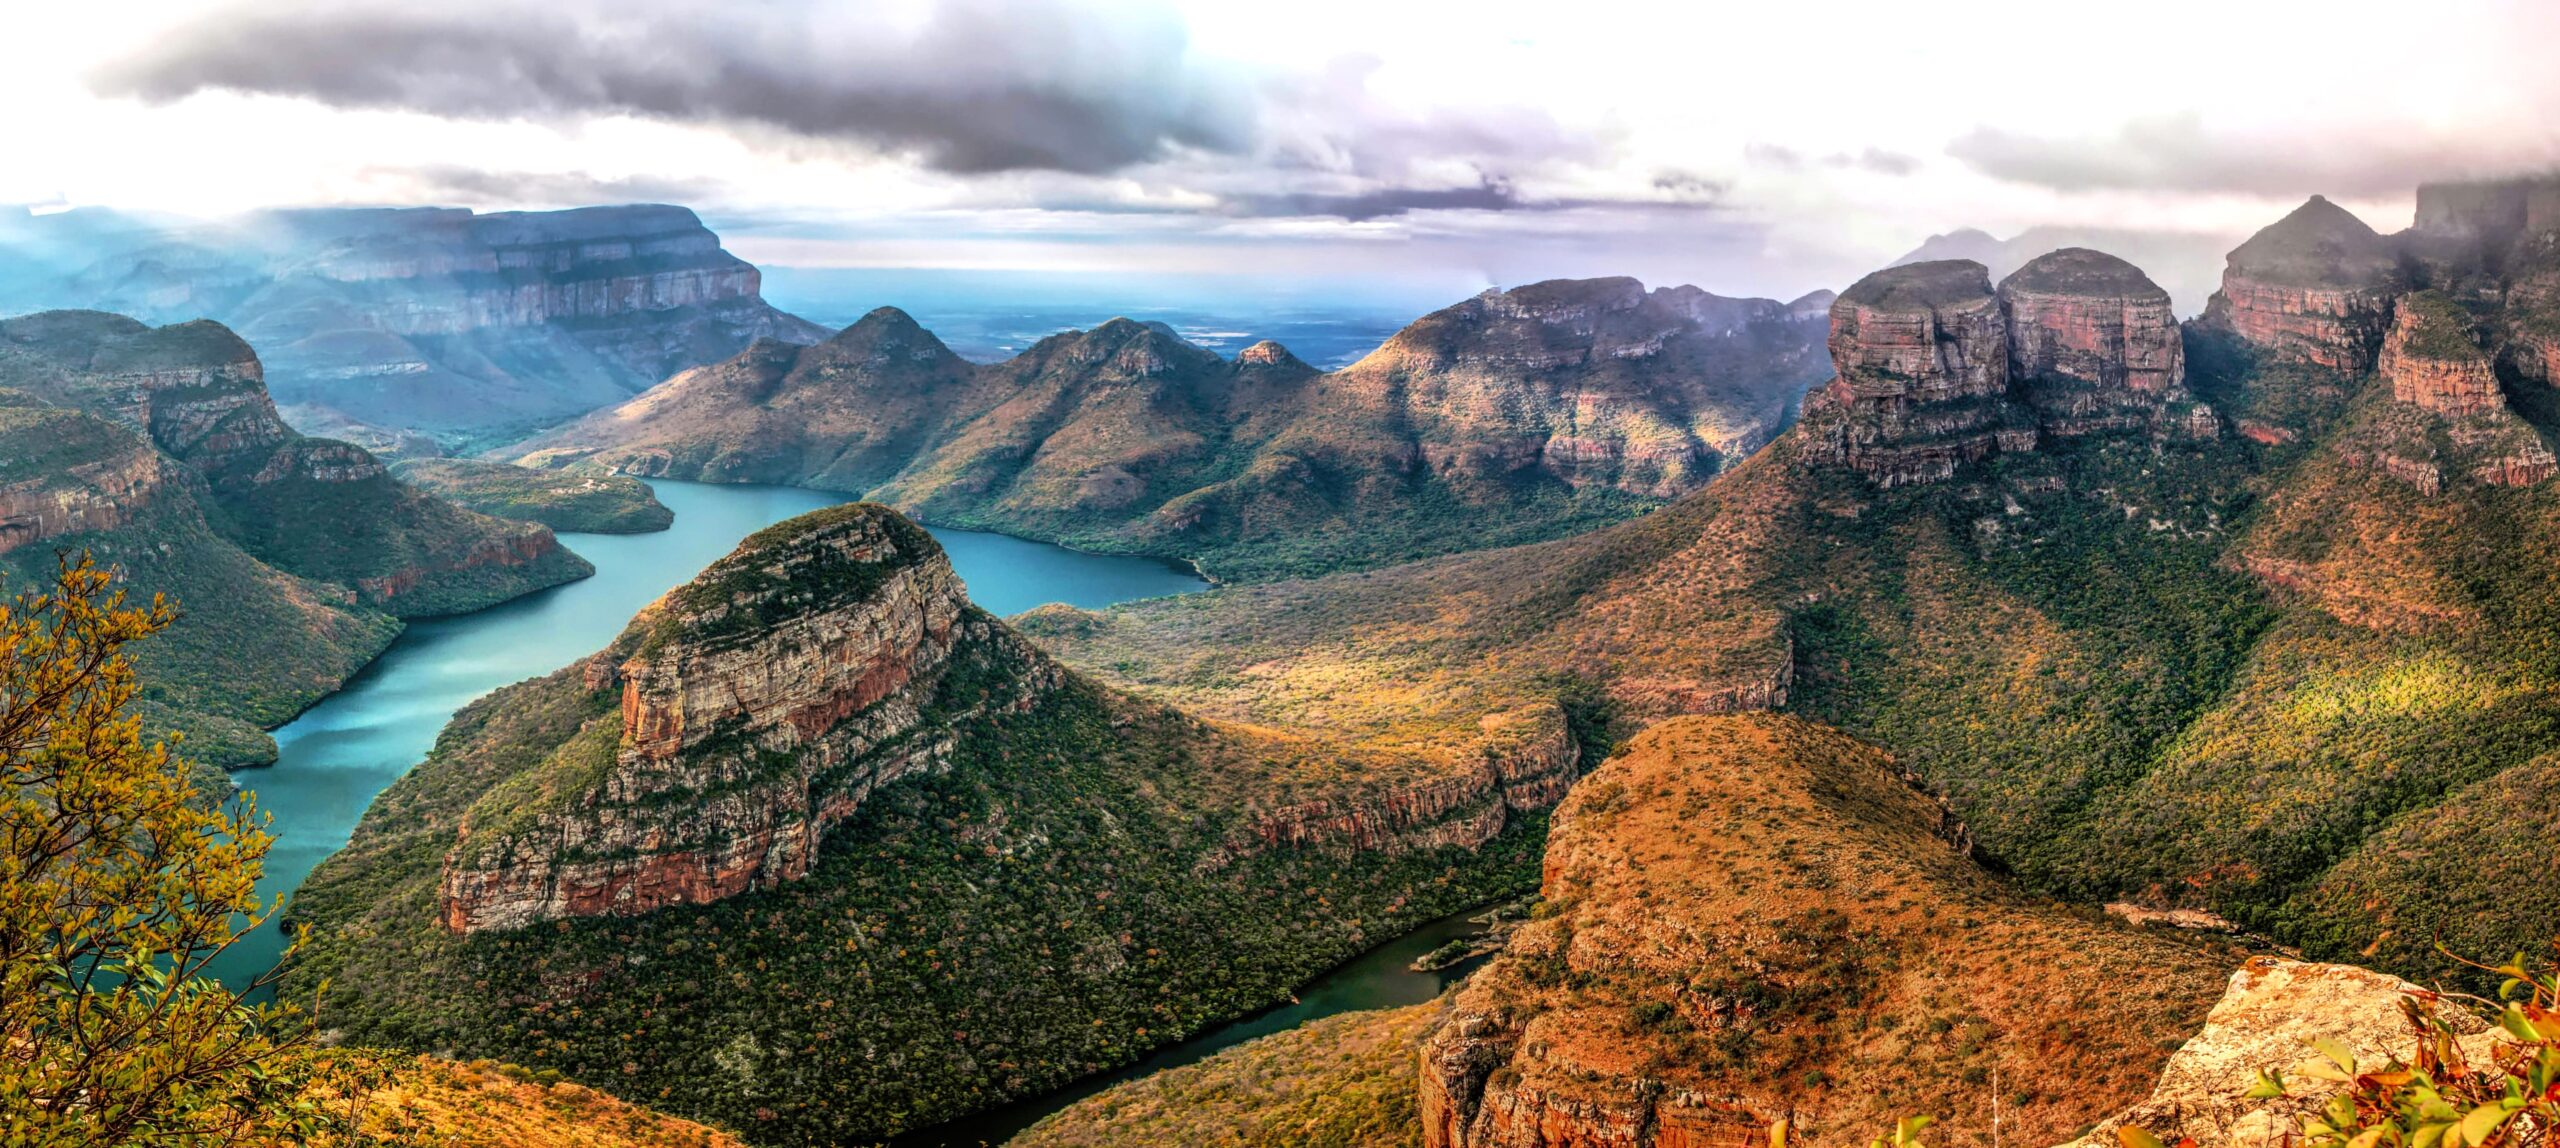 Three Rondavels Afrique du Sud Canyon Blyde River